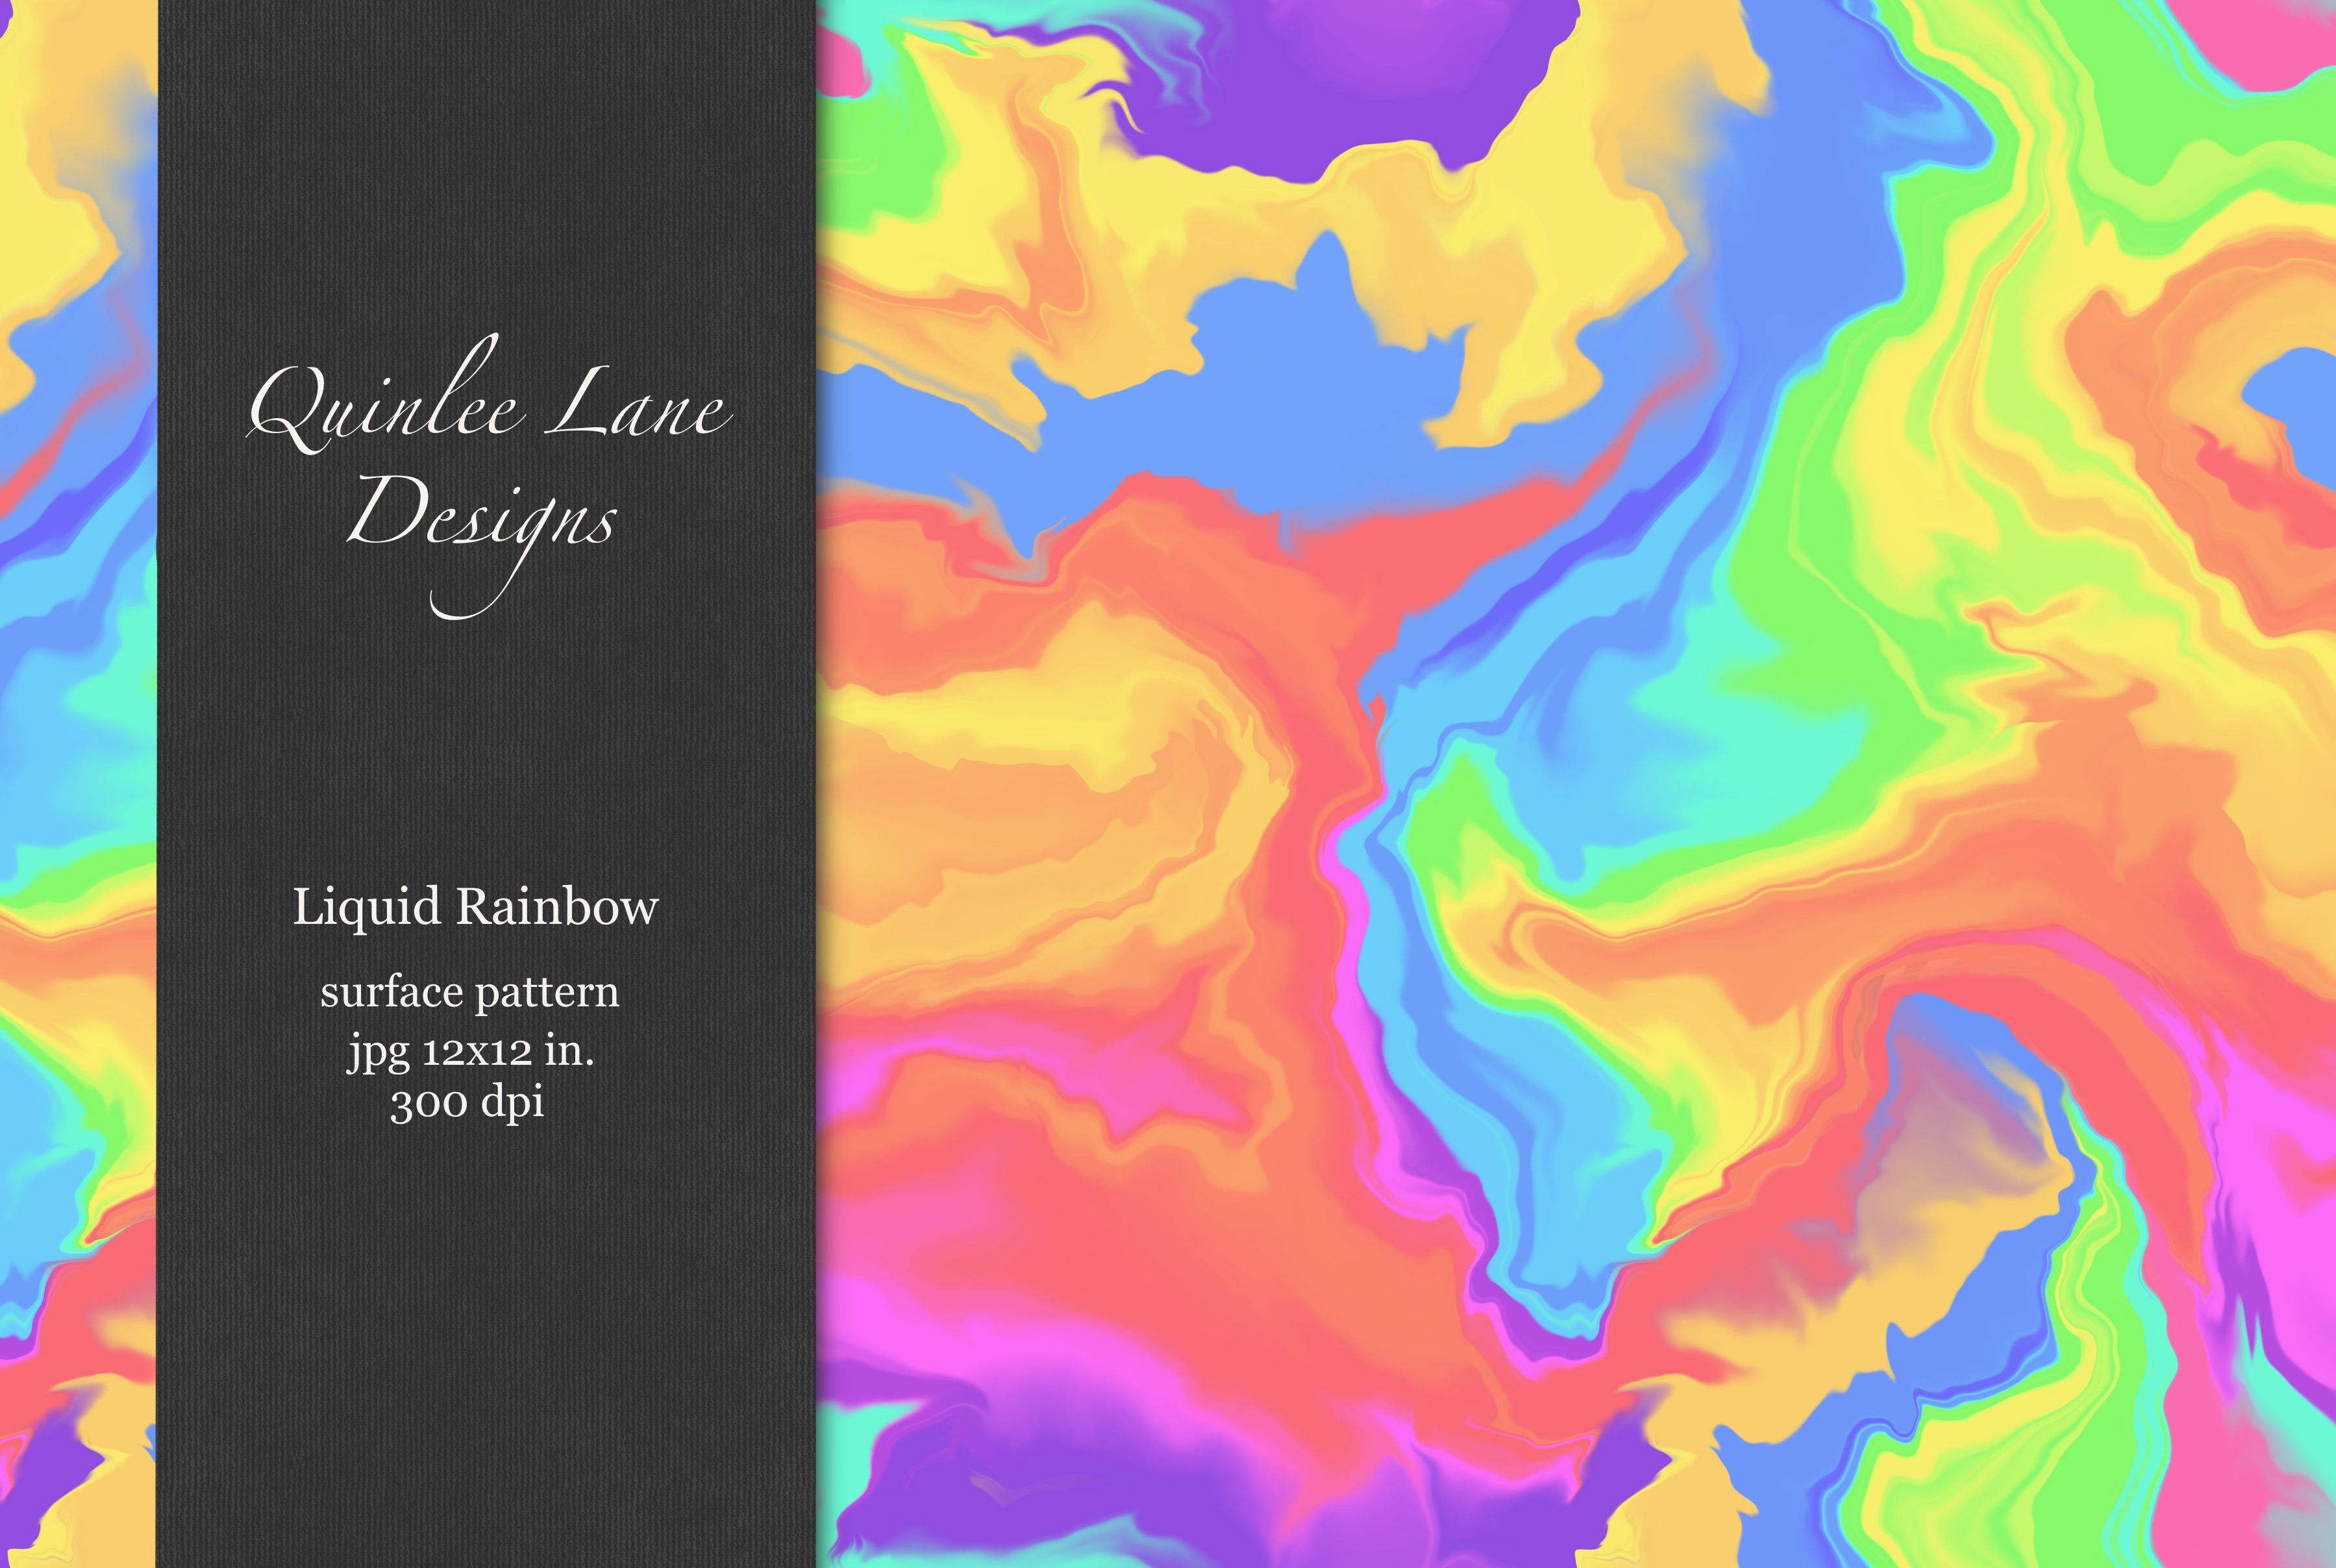 Tie Dye Liquid Rainbow Pattern cover image.